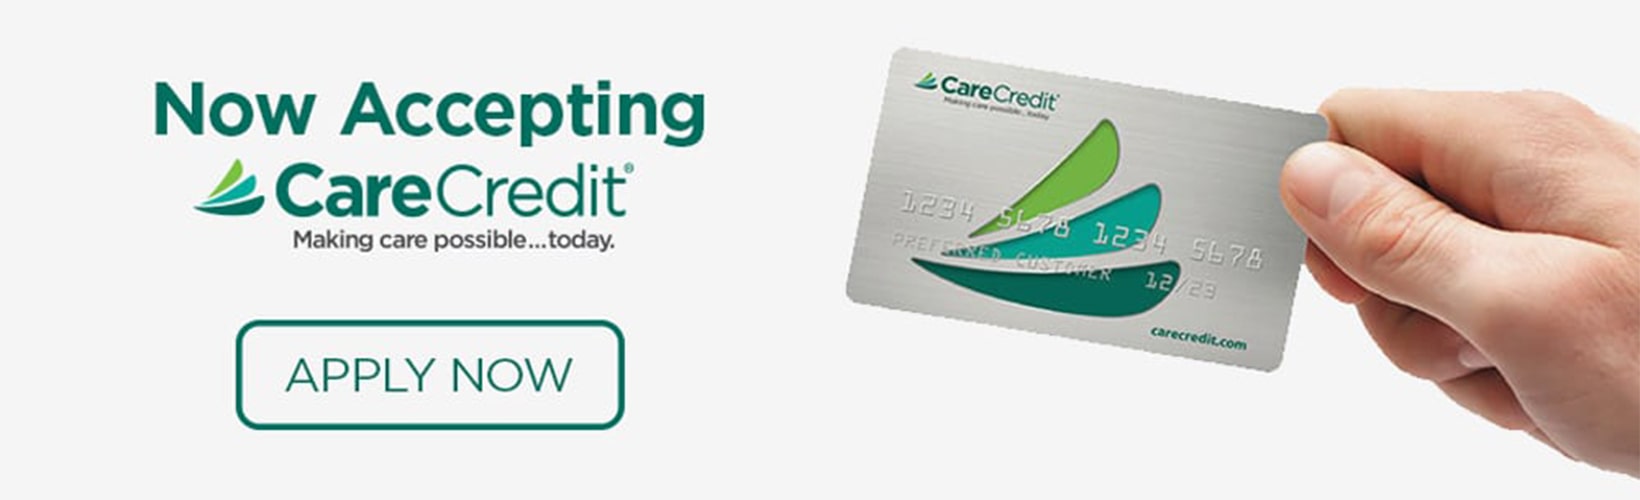 A close up of a CareCredit card